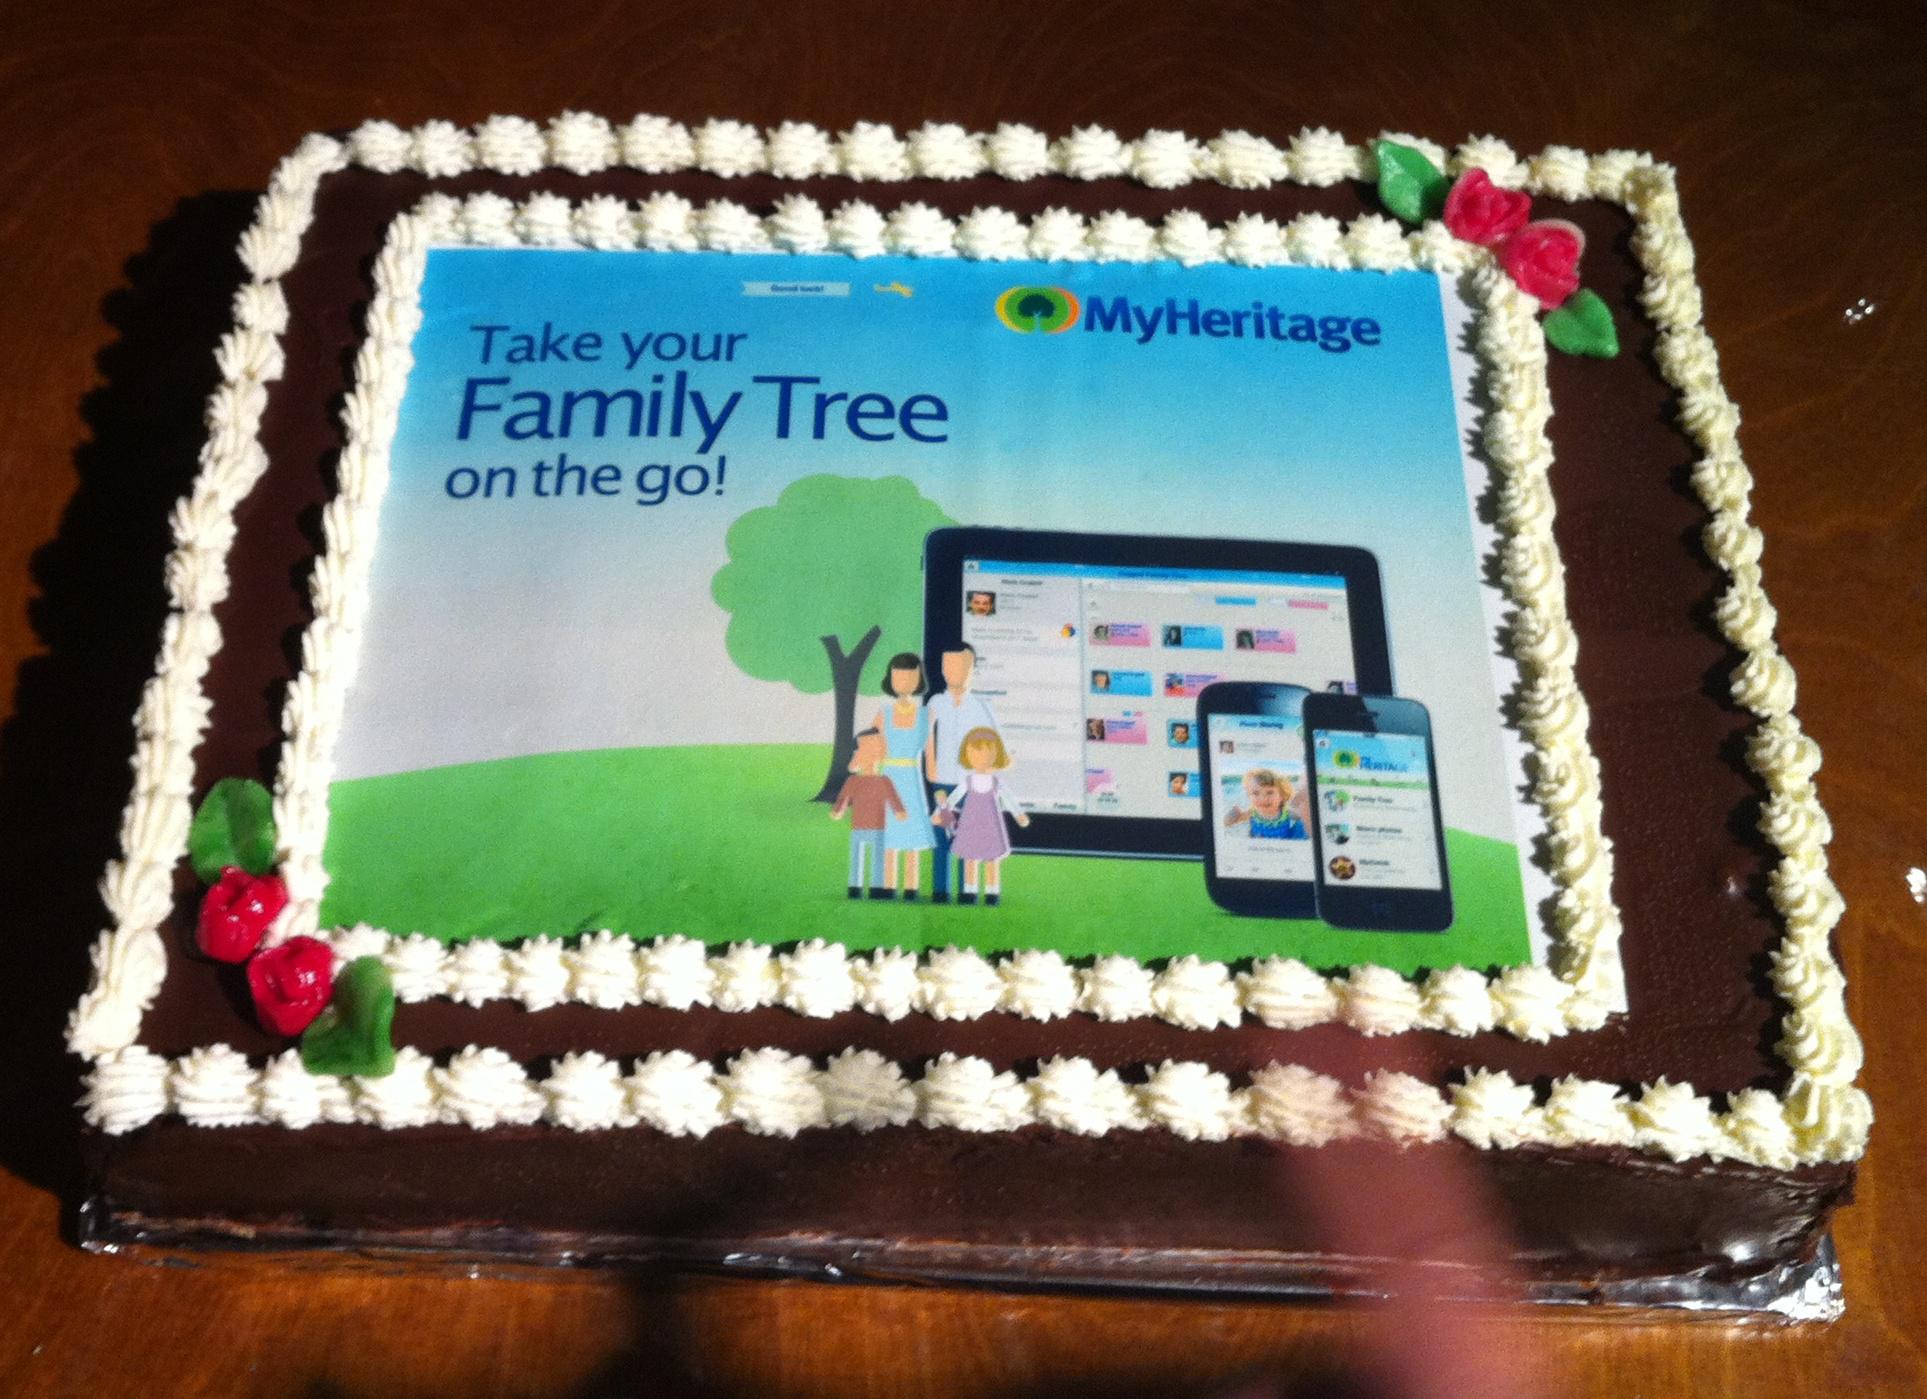 Speciale MyHeritage Mobiele app taart